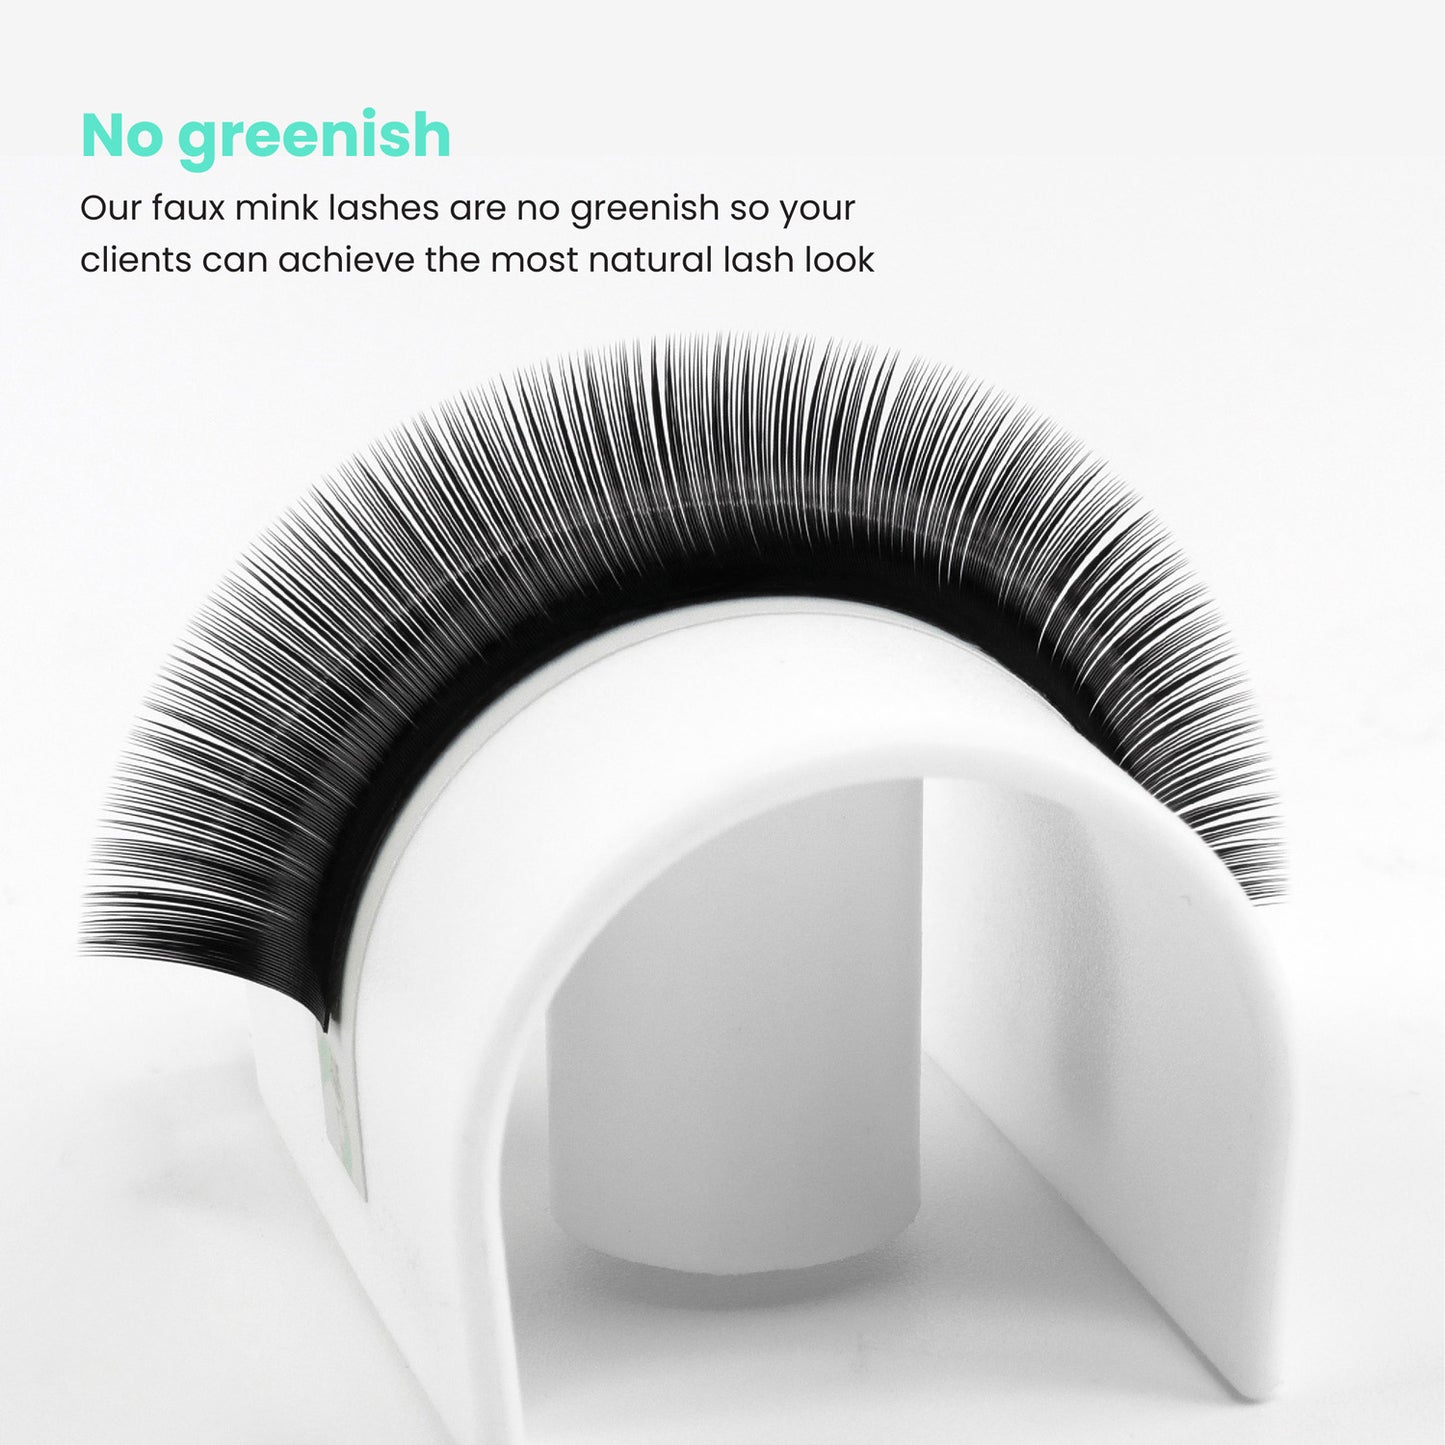 Faux-mink-classic-lashes-0.15mm-no-greenish